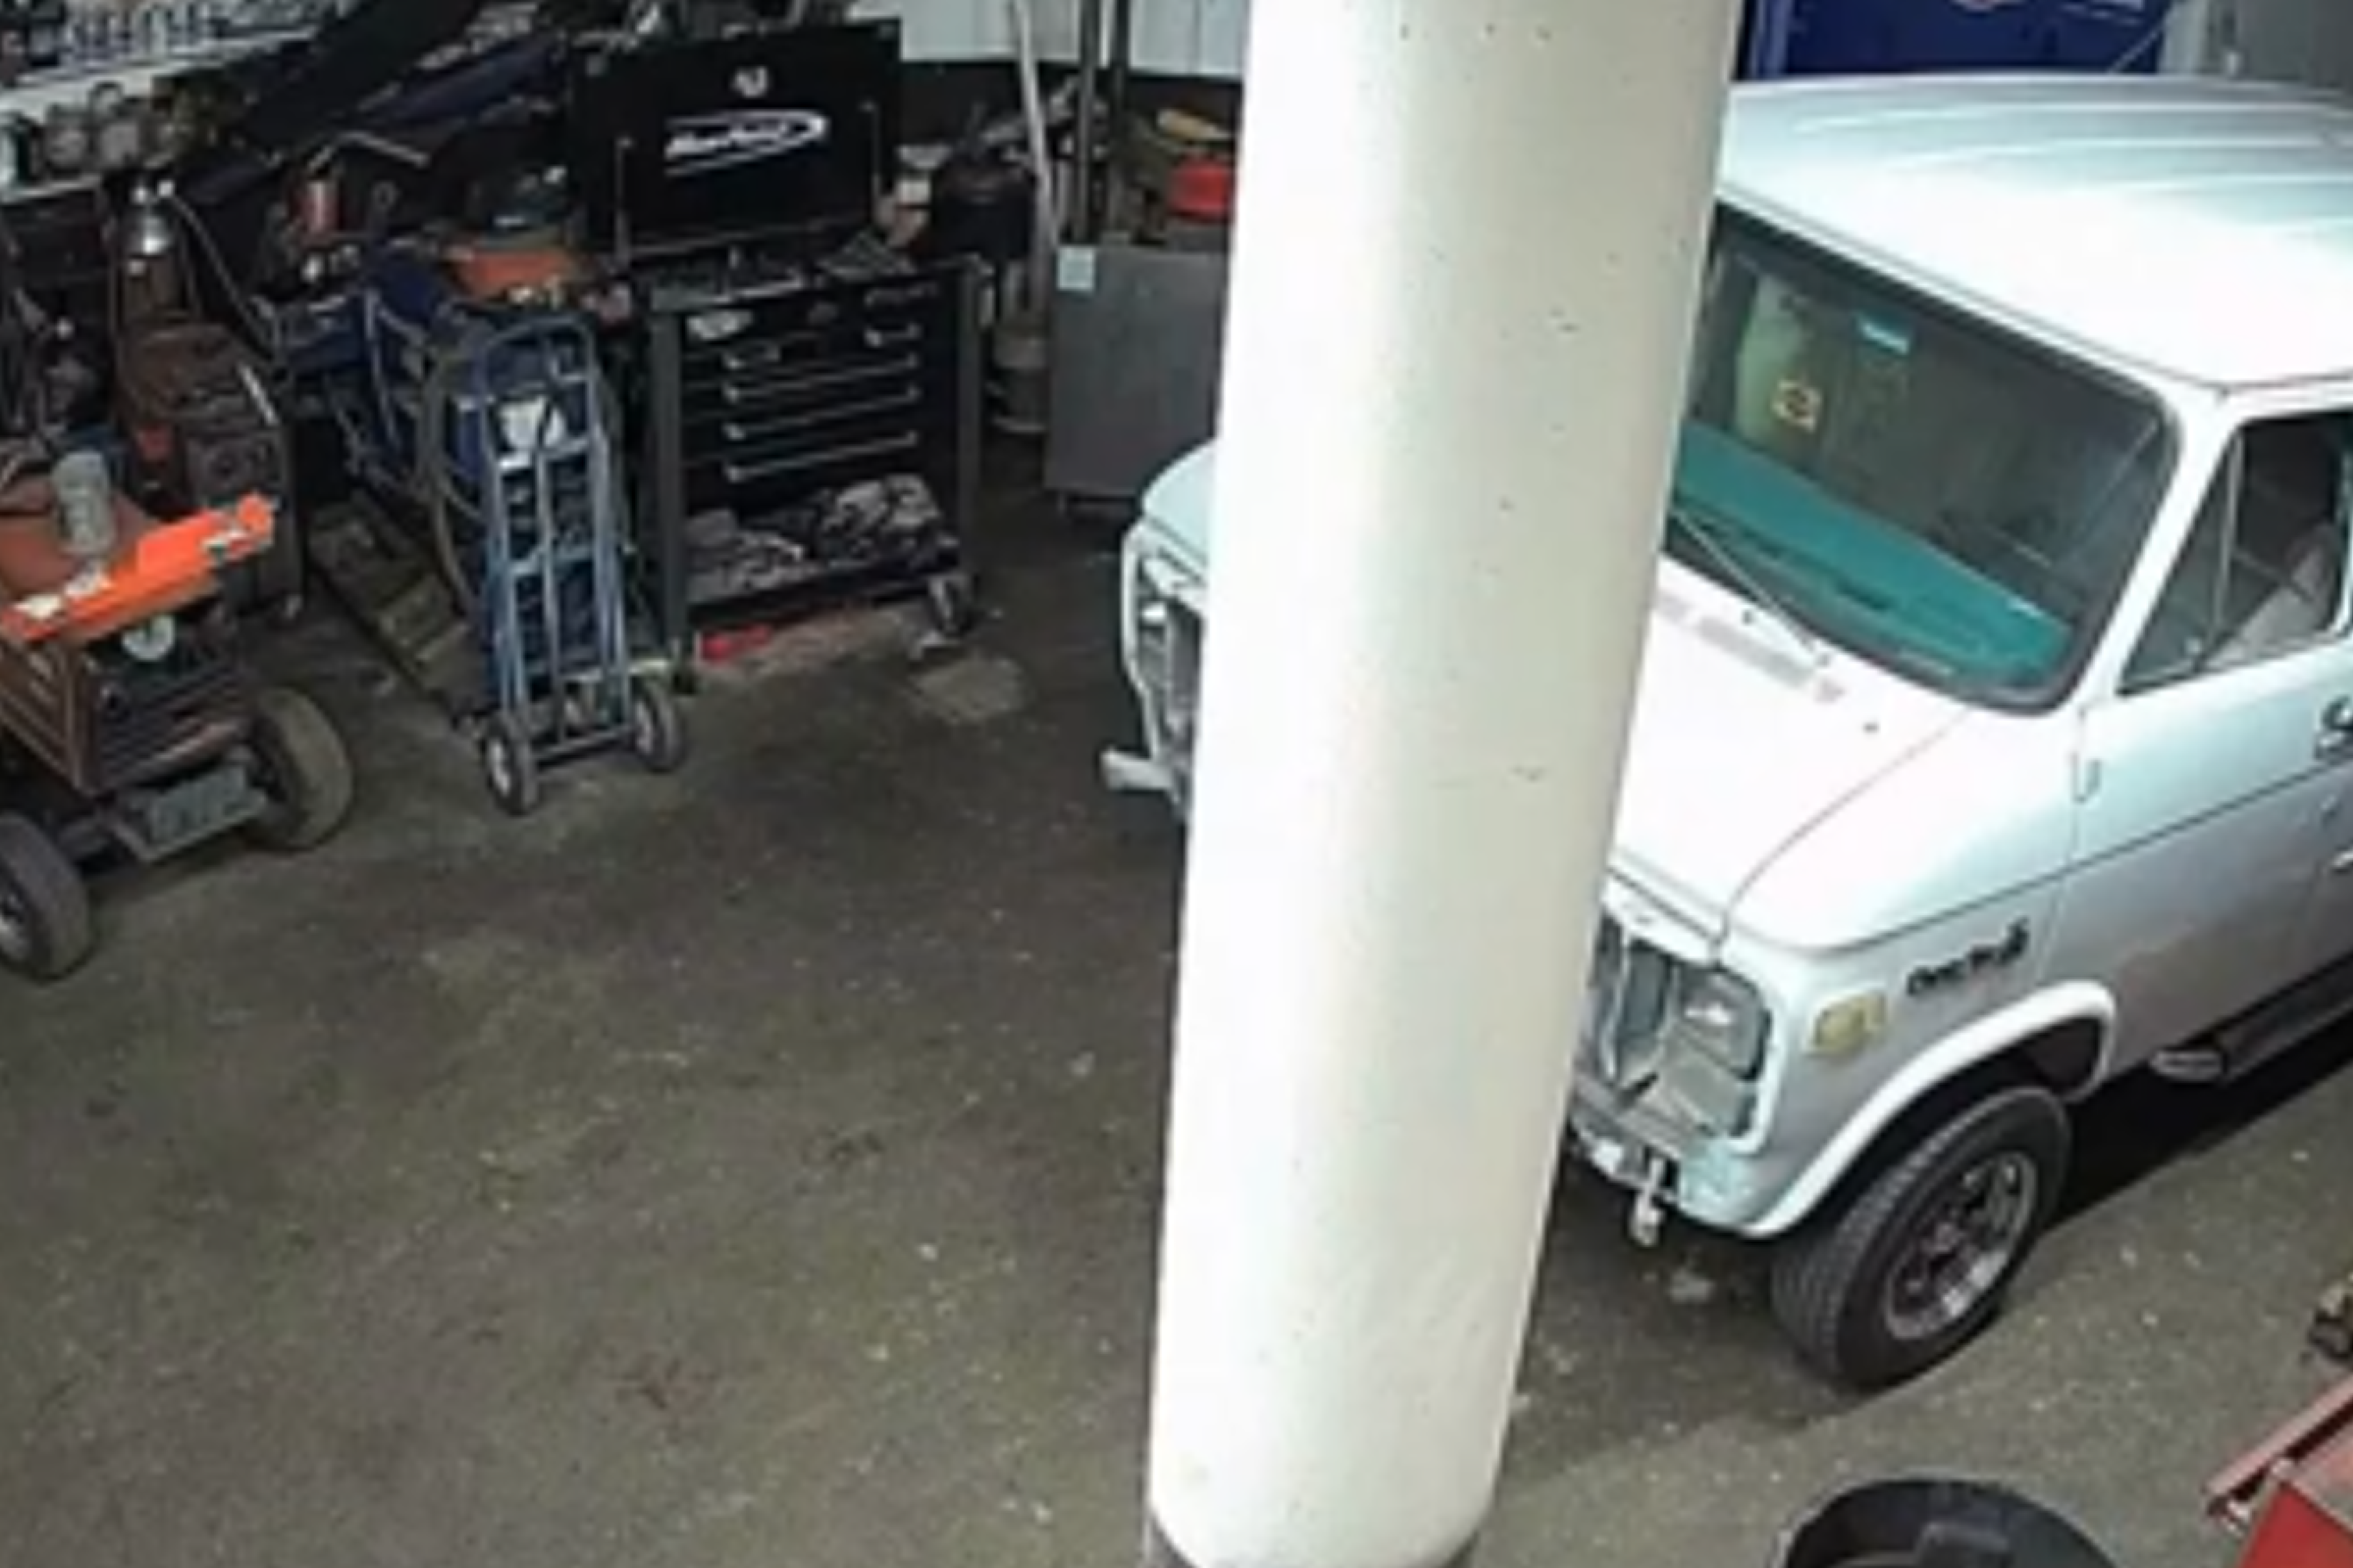 autoshop surveillance security camera 